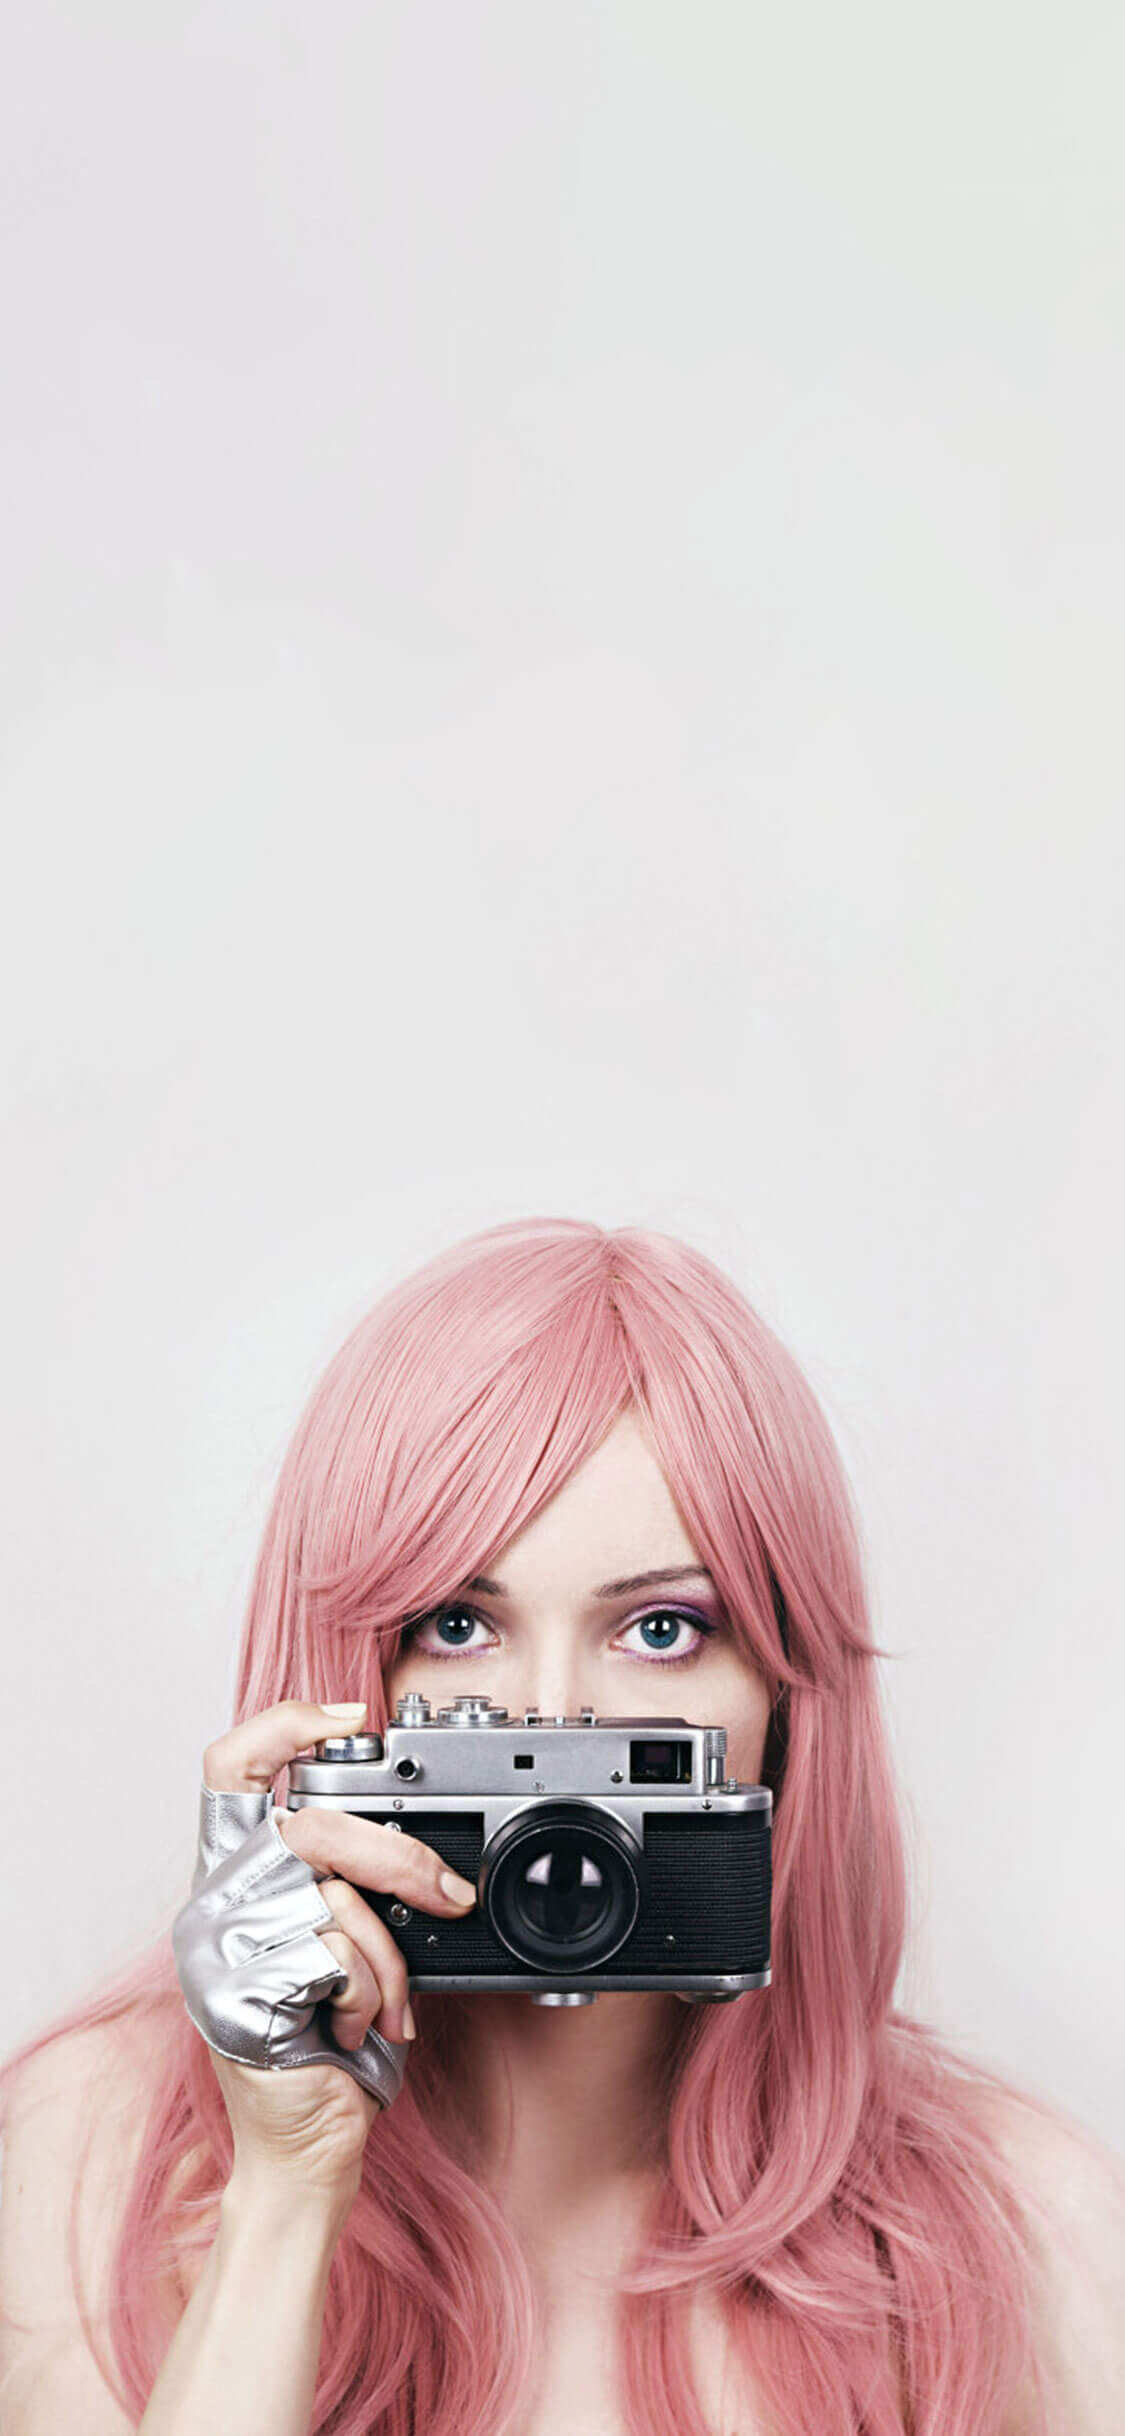 Cool-girl-holding-a-kamera